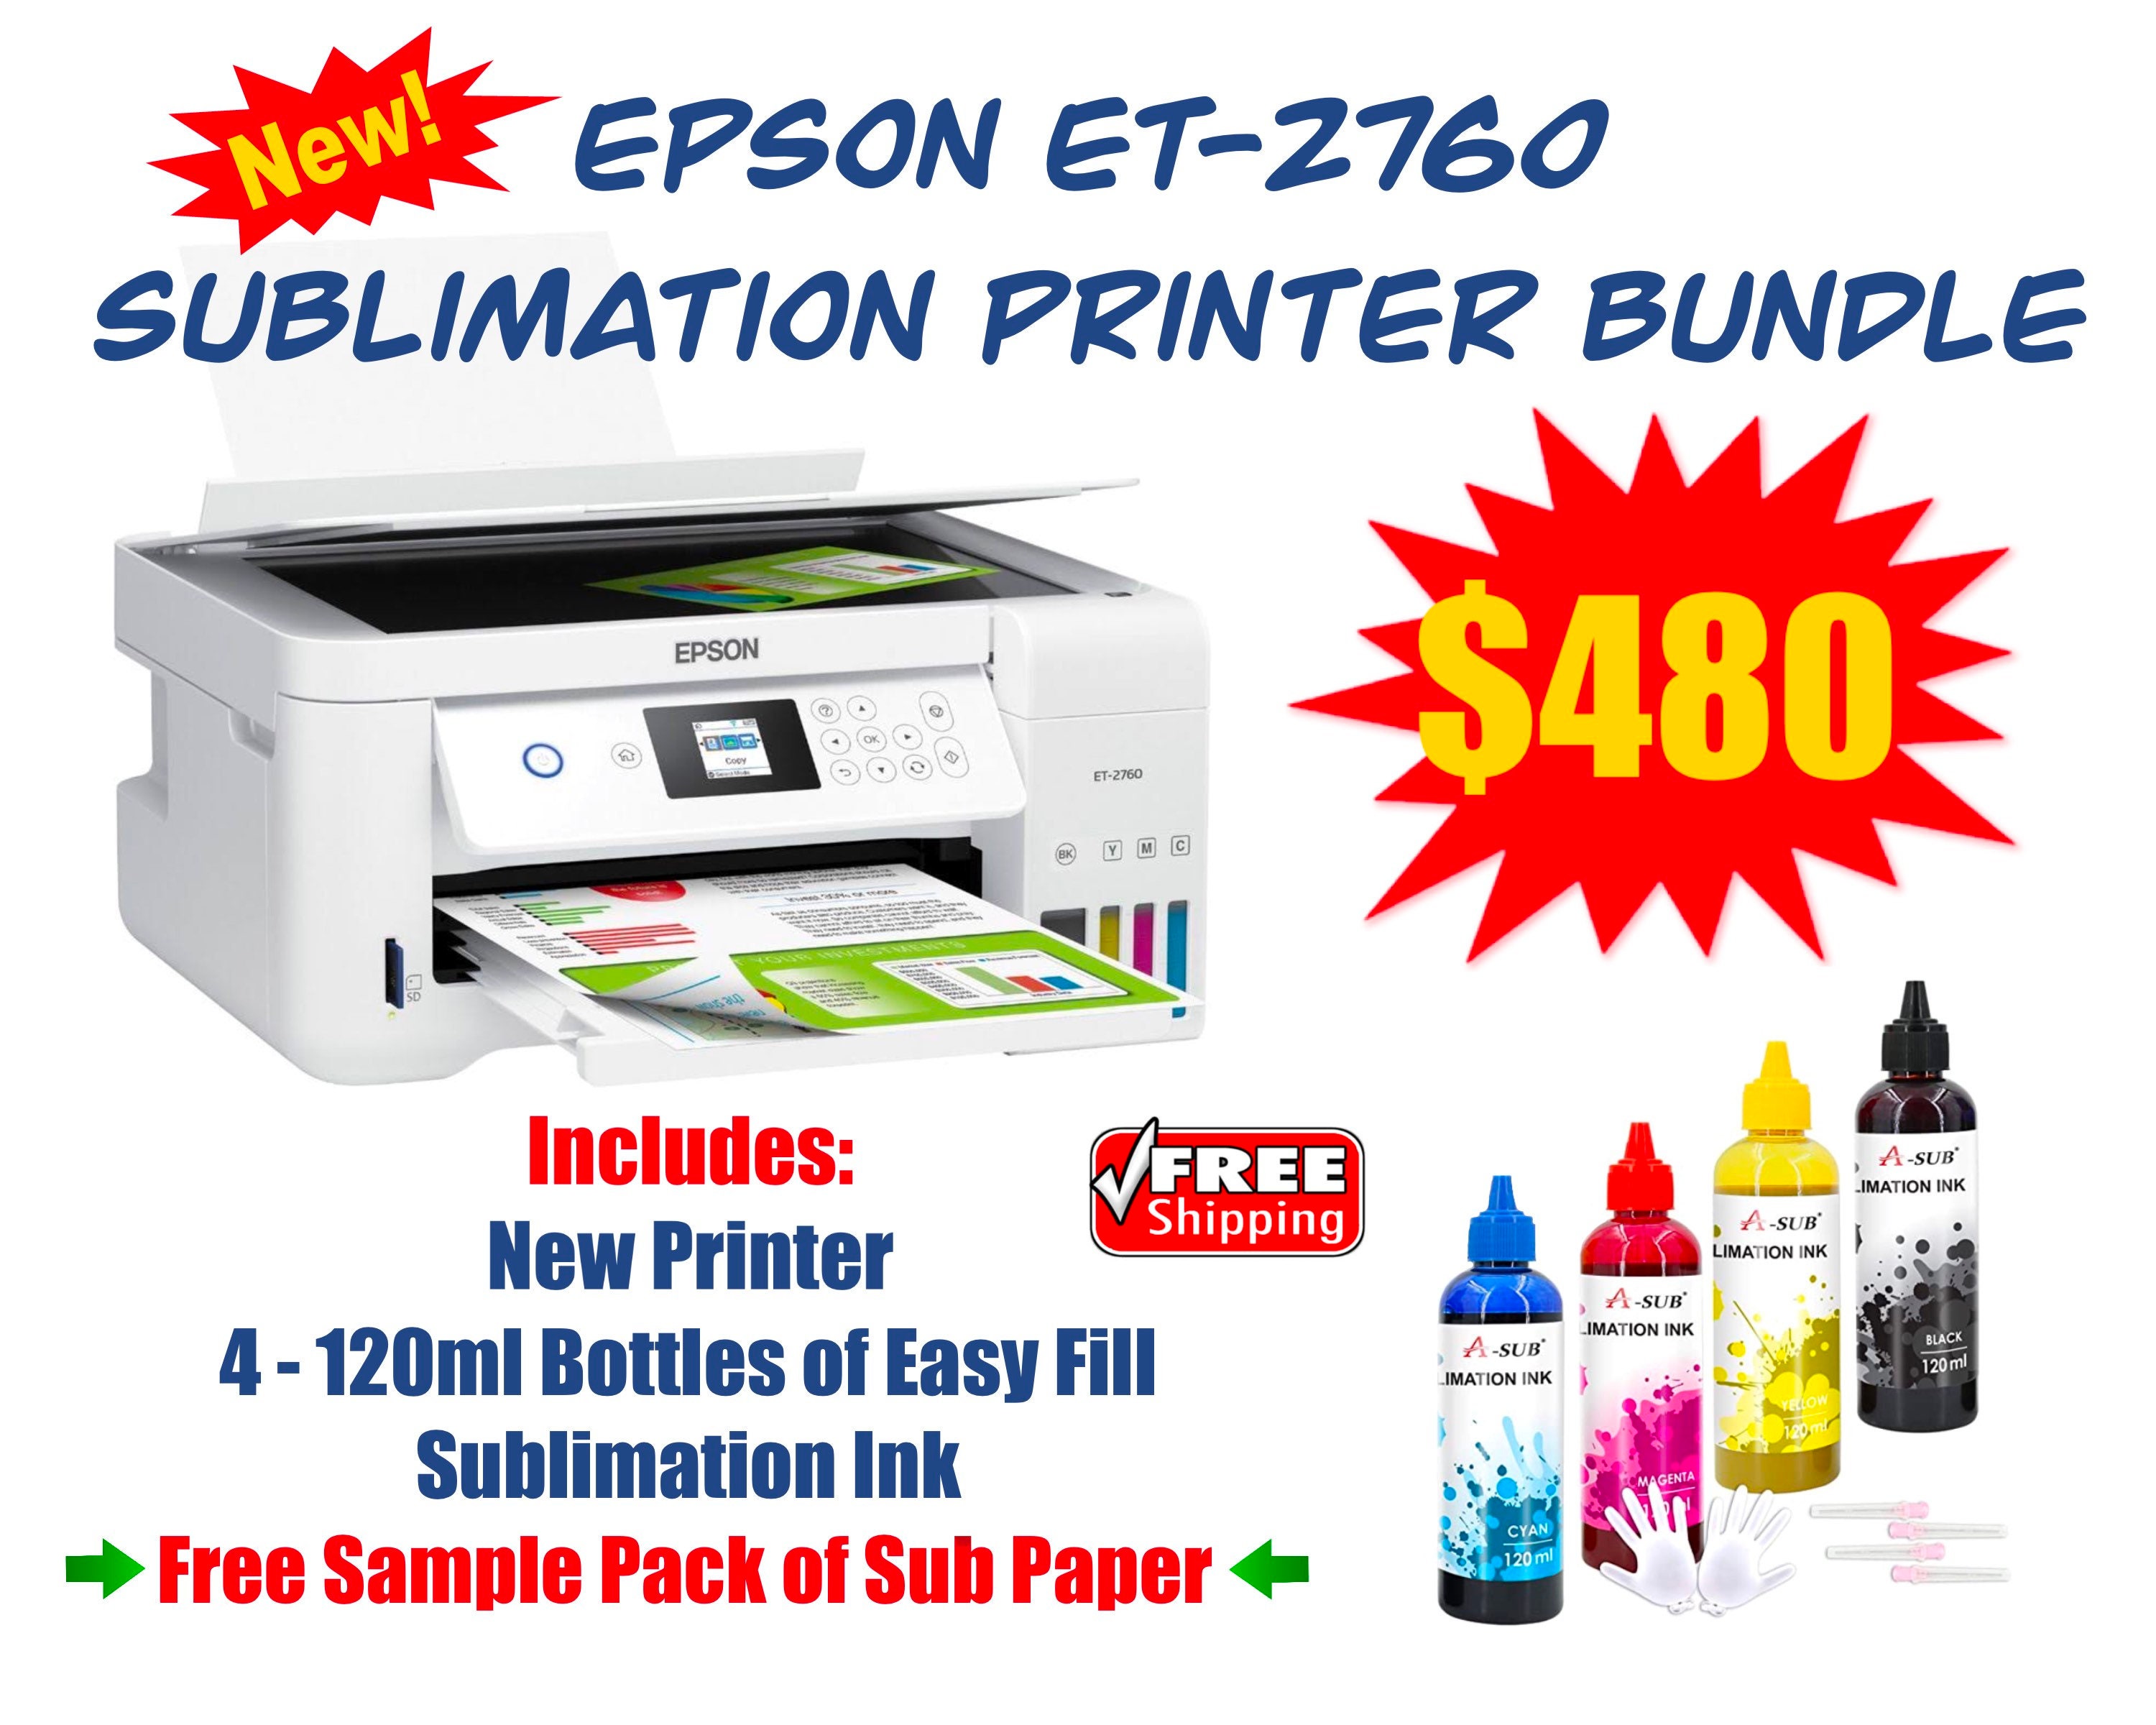 EcoTank Sublimation Printer Bundle: Printer with Sublimation Ink + Paper 